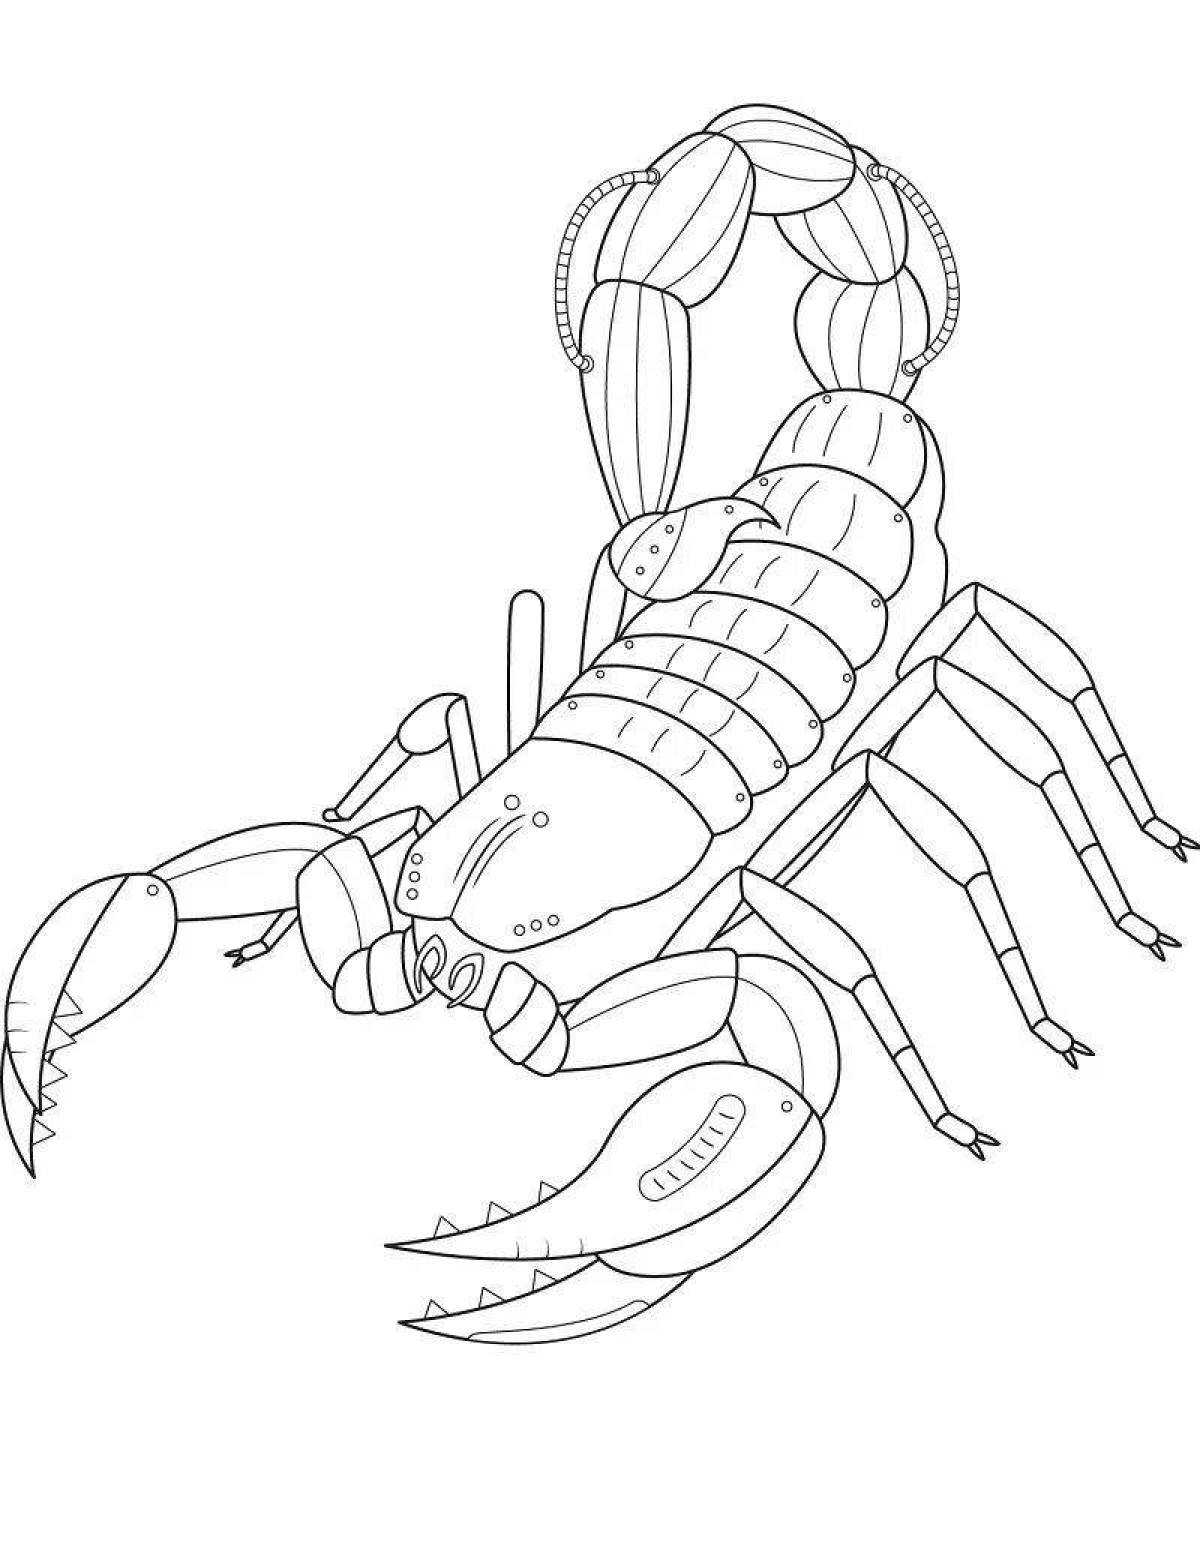 Incredible scorpion coloring book for kids